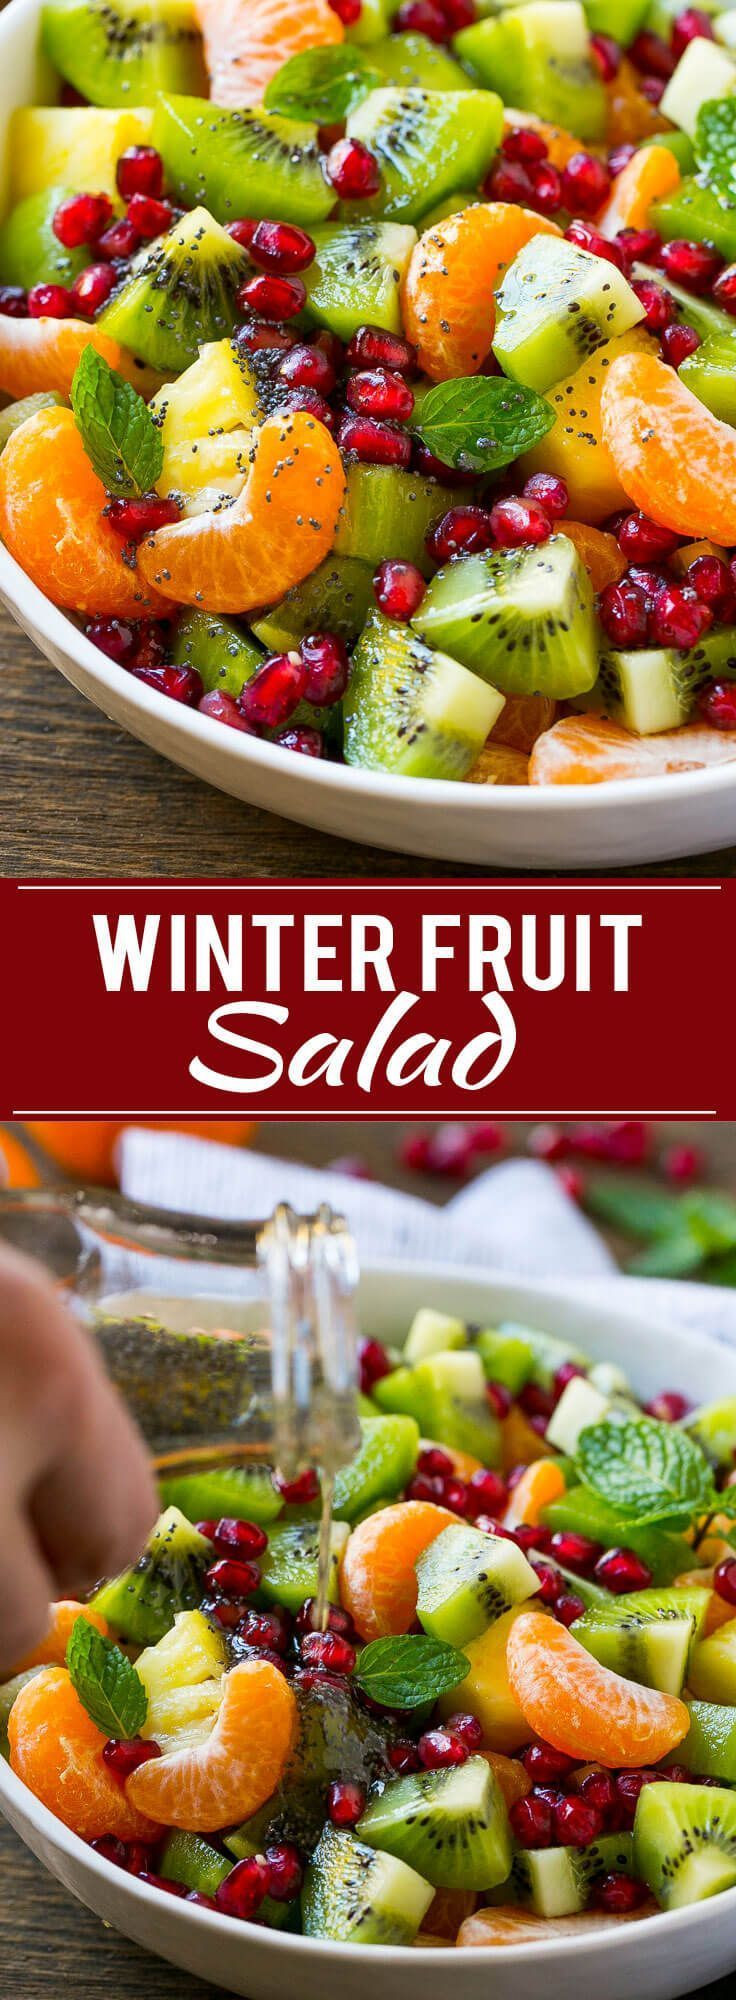 Winter Fruit Salad Ideas
 Best 25 Quiche recipes ideas on Pinterest